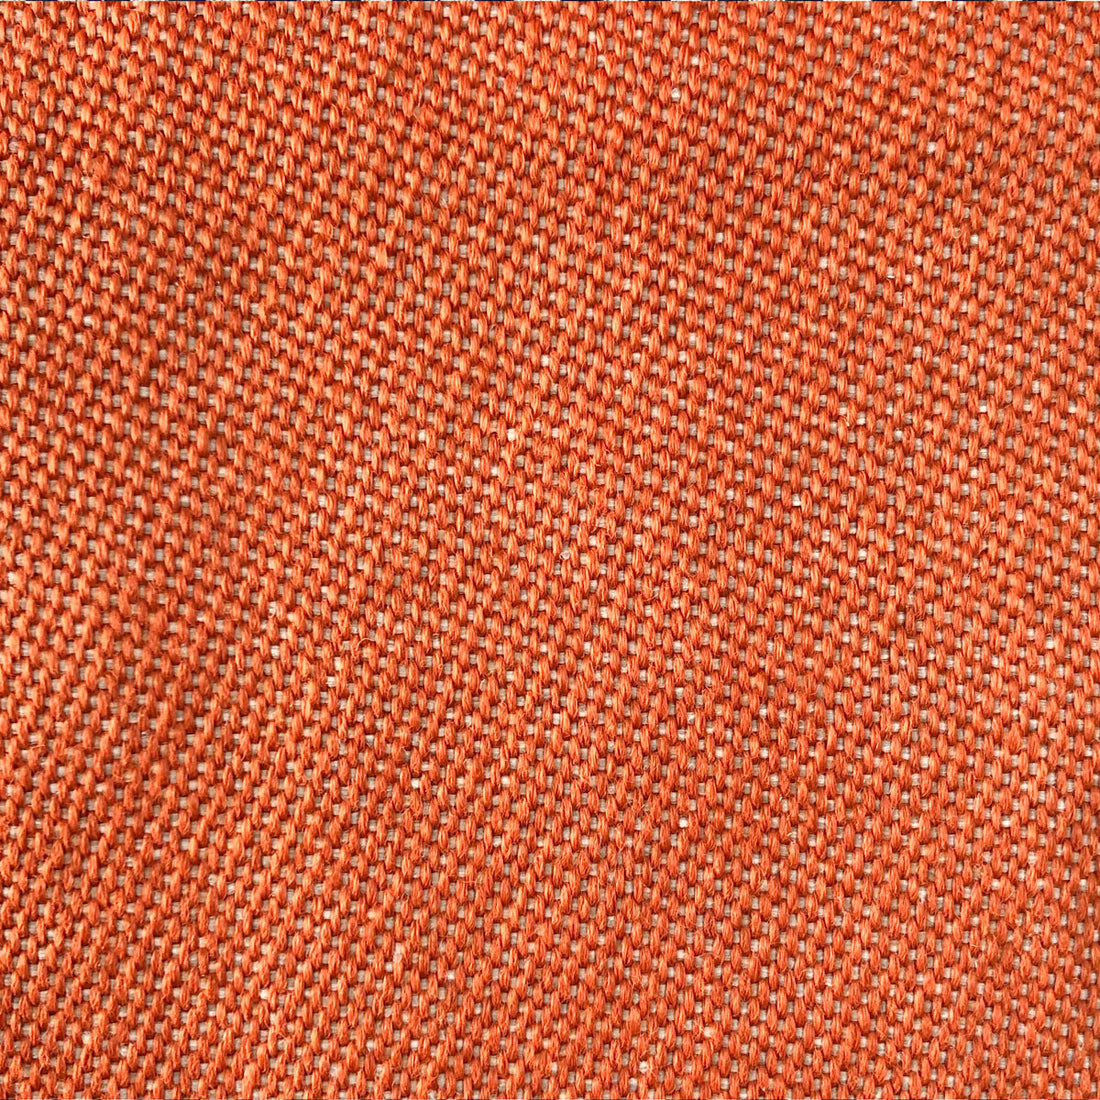 Max fabric in naranja color - pattern LCT1067.004.0 - by Gaston y Daniela in the Lorenzo Castillo VI collection